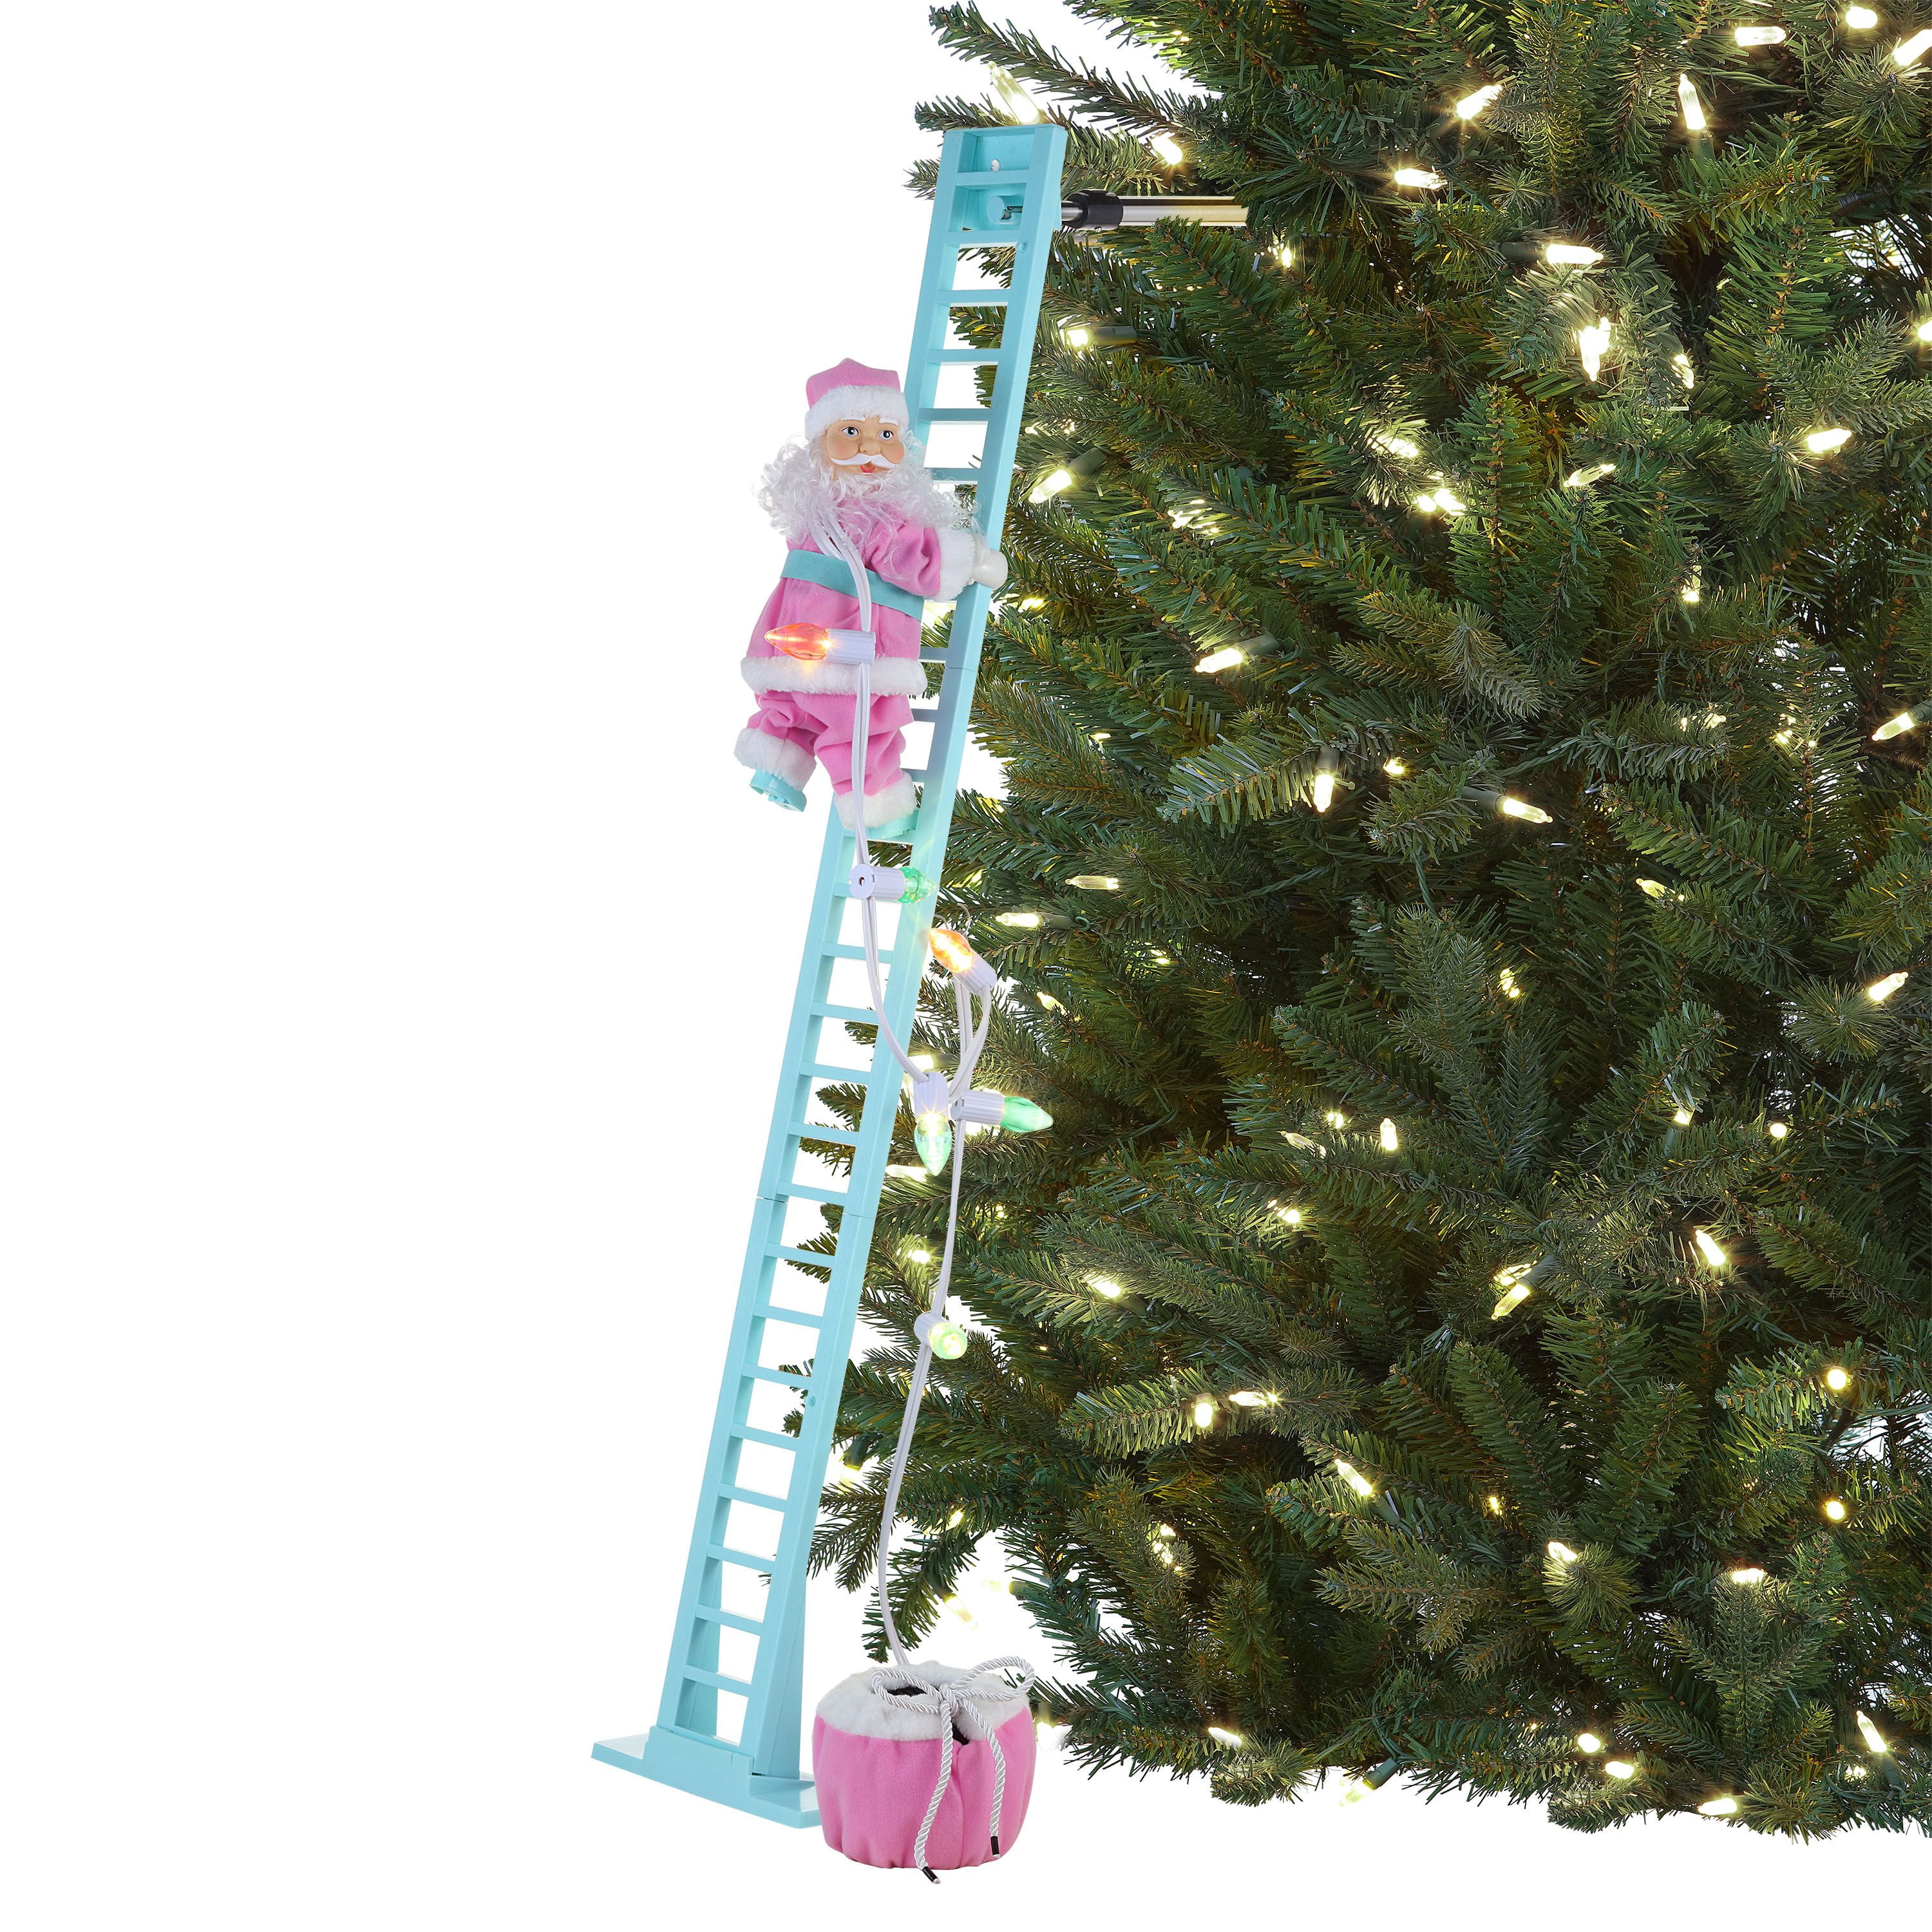 Mr. Christmas 40" Plastic Animated Super Climbing Santa, Pink, One Size